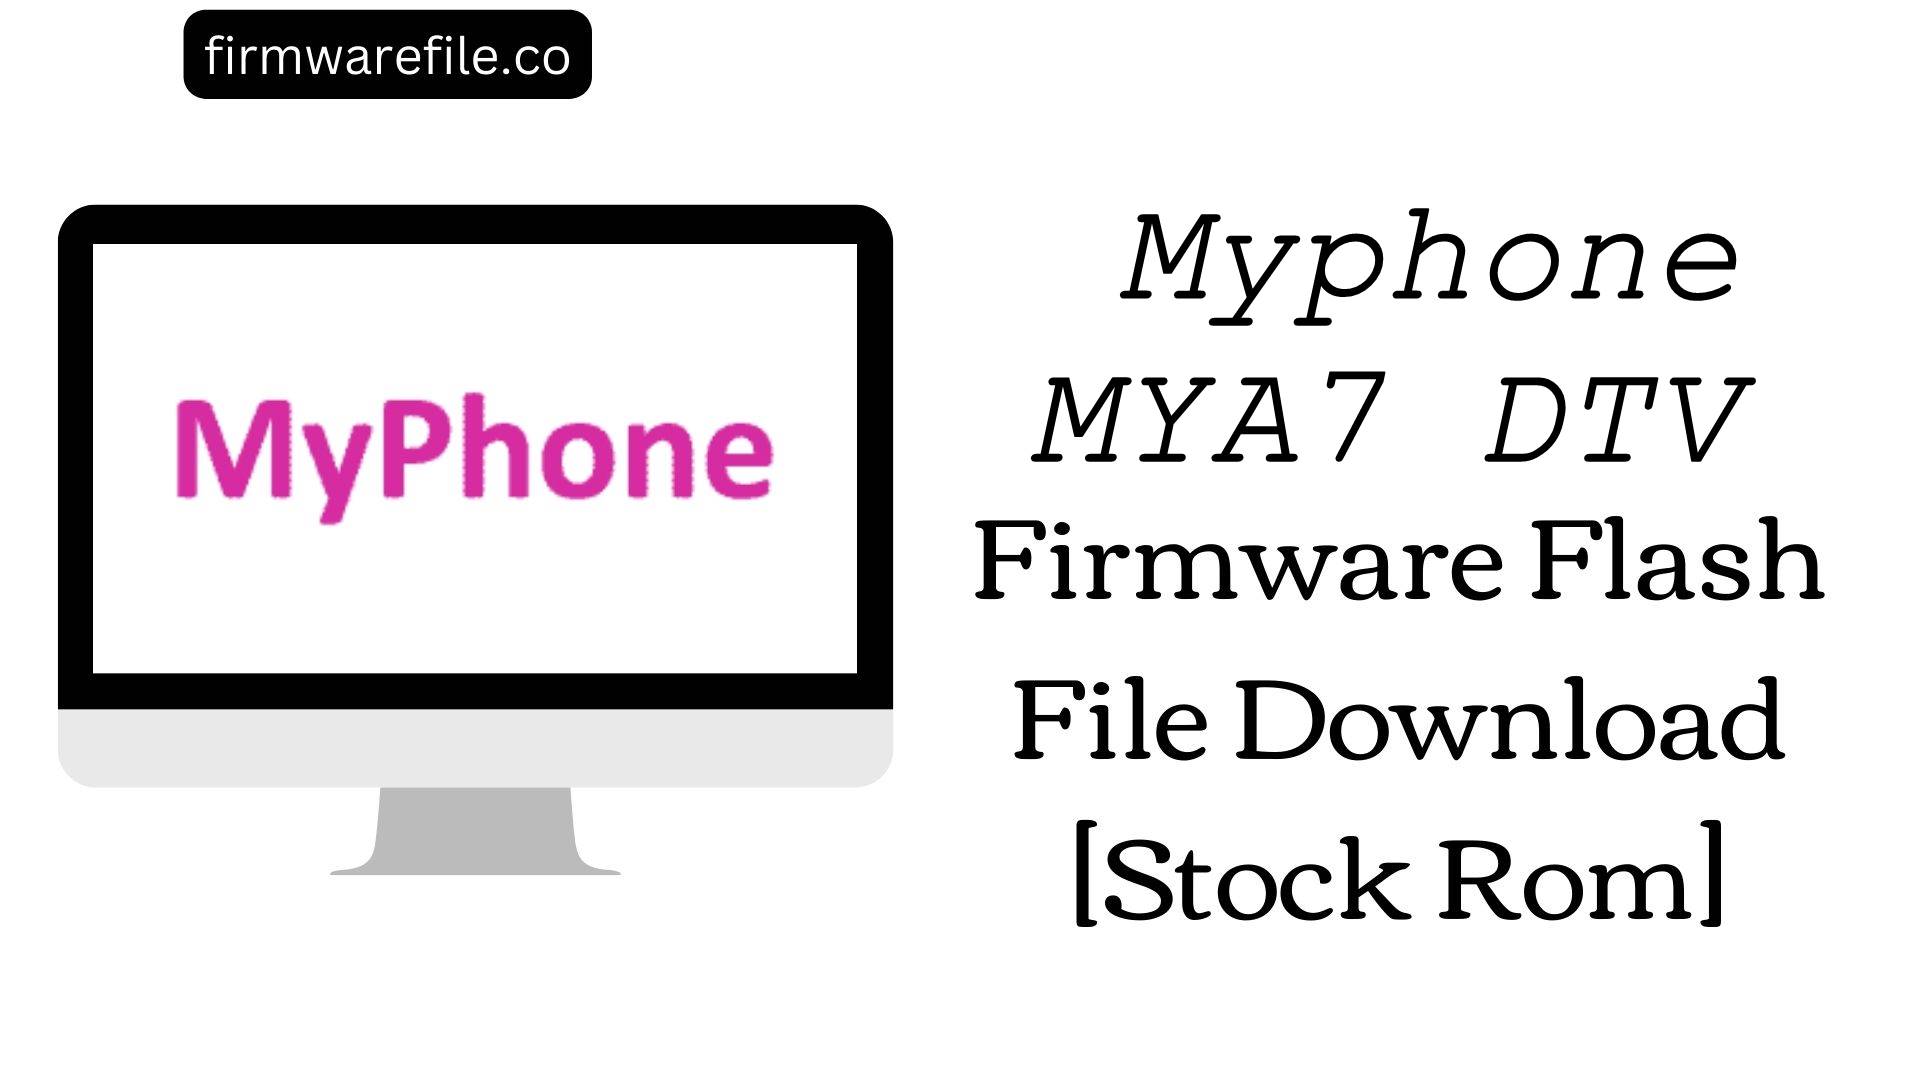 Myphone MYA7 DTV